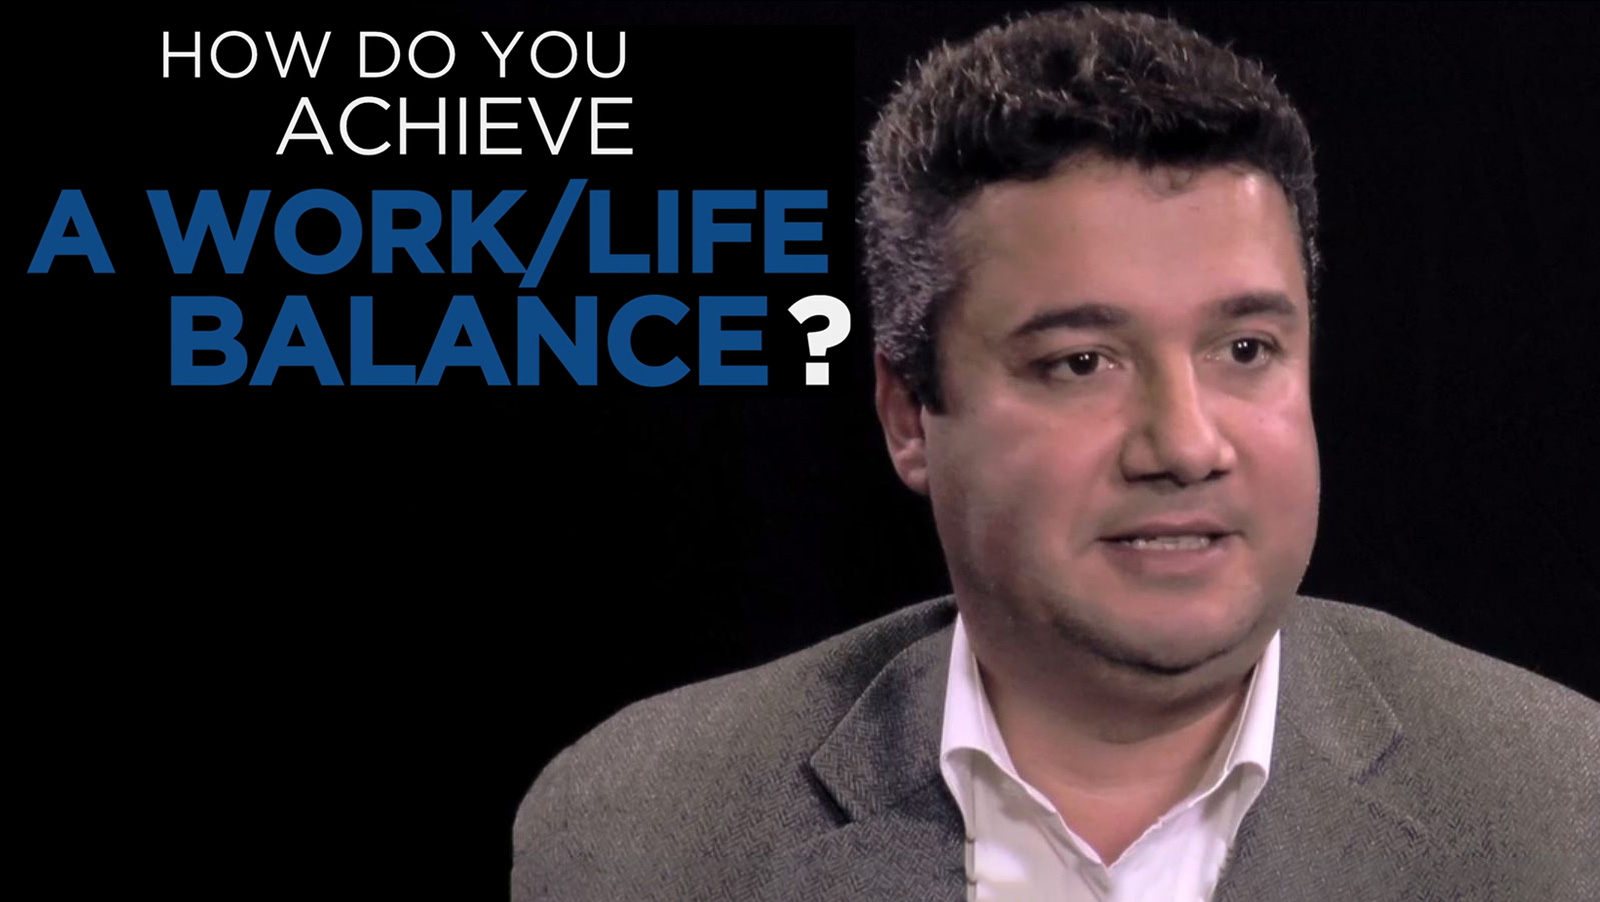 Hussein Chahine: Shared Experience - How do you achieve a work/life balance?